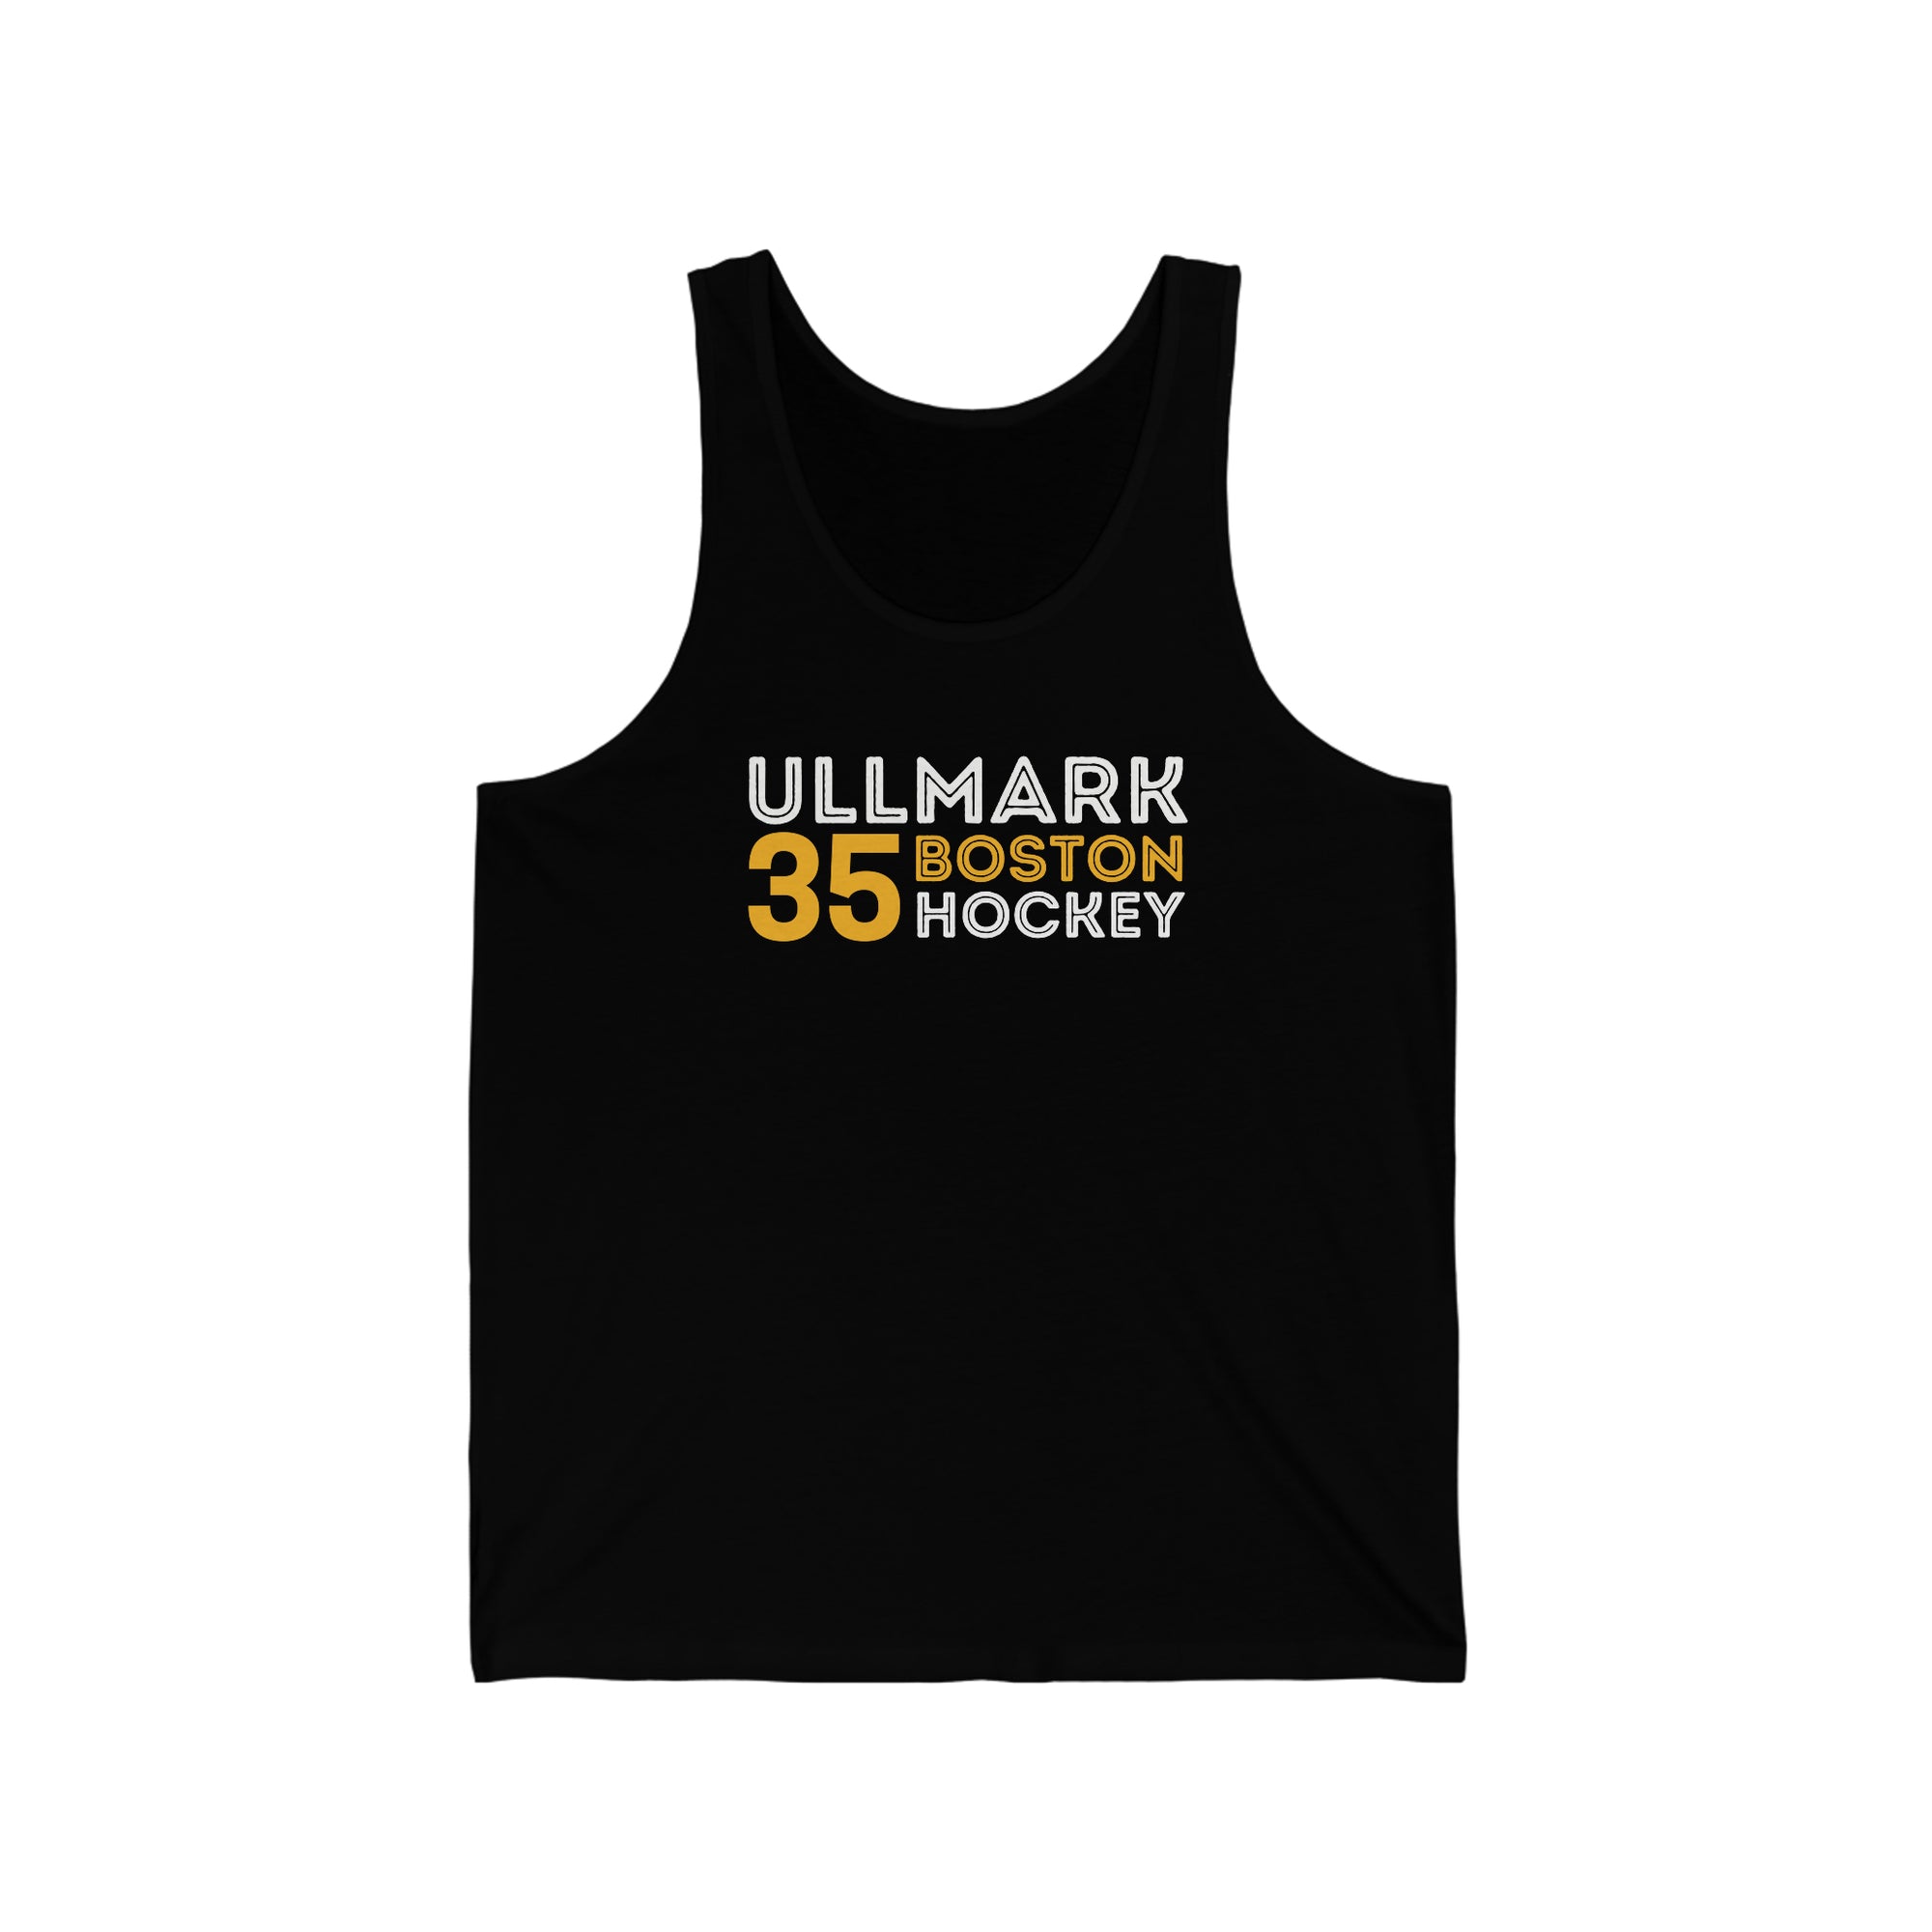 Ullmark 35 Boston Hockey Grafitti Wall Design Unisex Jersey Tank Top